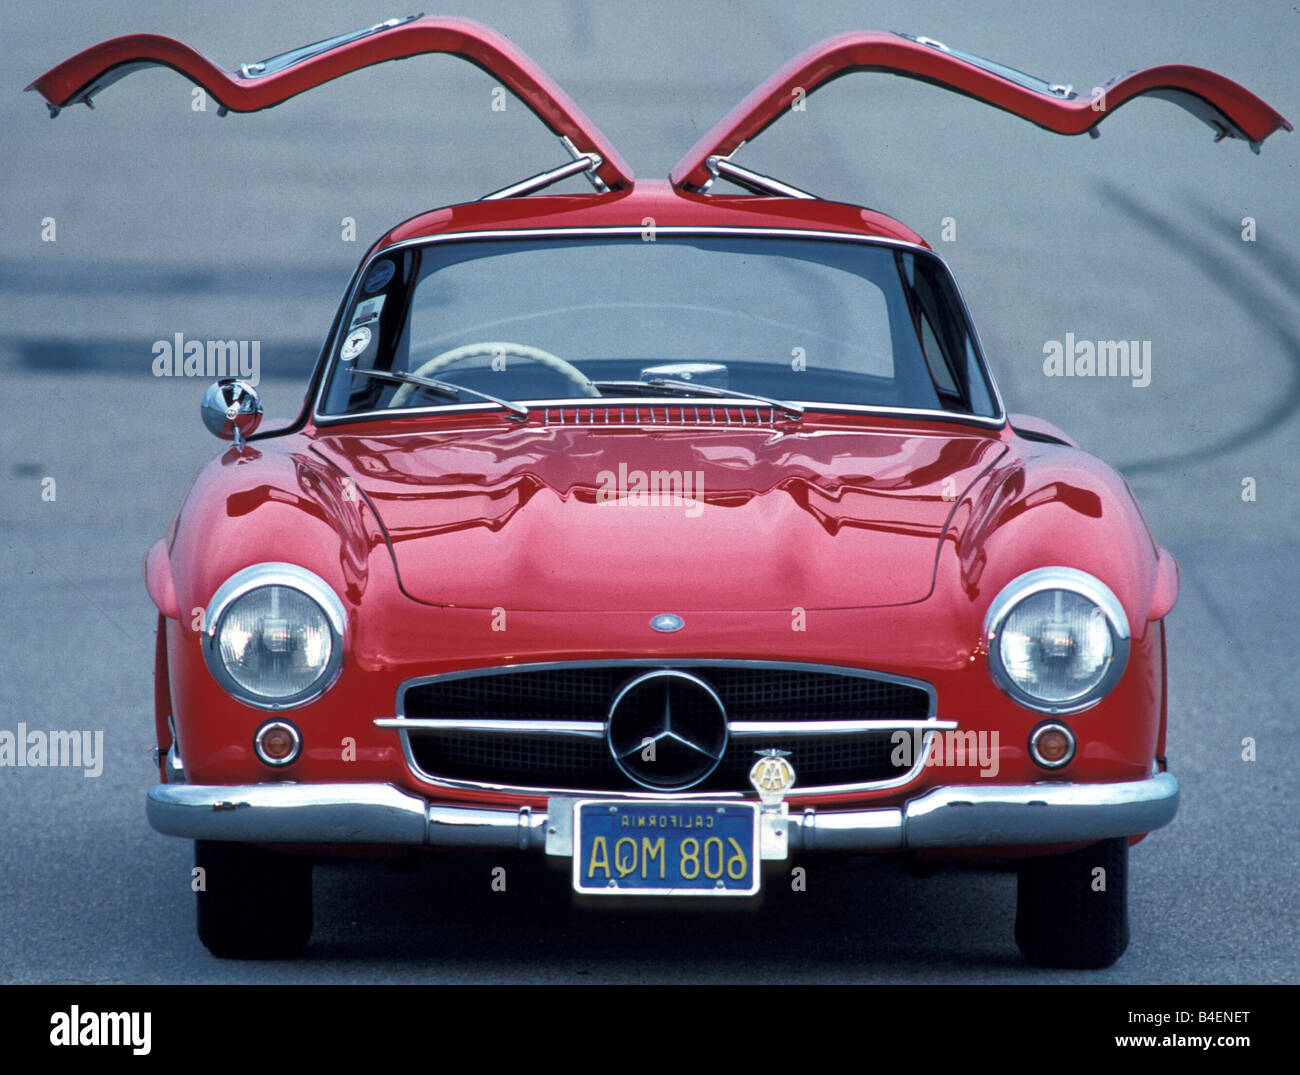 Car, Mercedes 300 SL, sports car, model year 1954-63, vintage car, 1950s, fifties, 1960s, sixties, red, folding, door, swing, do Stock Photo